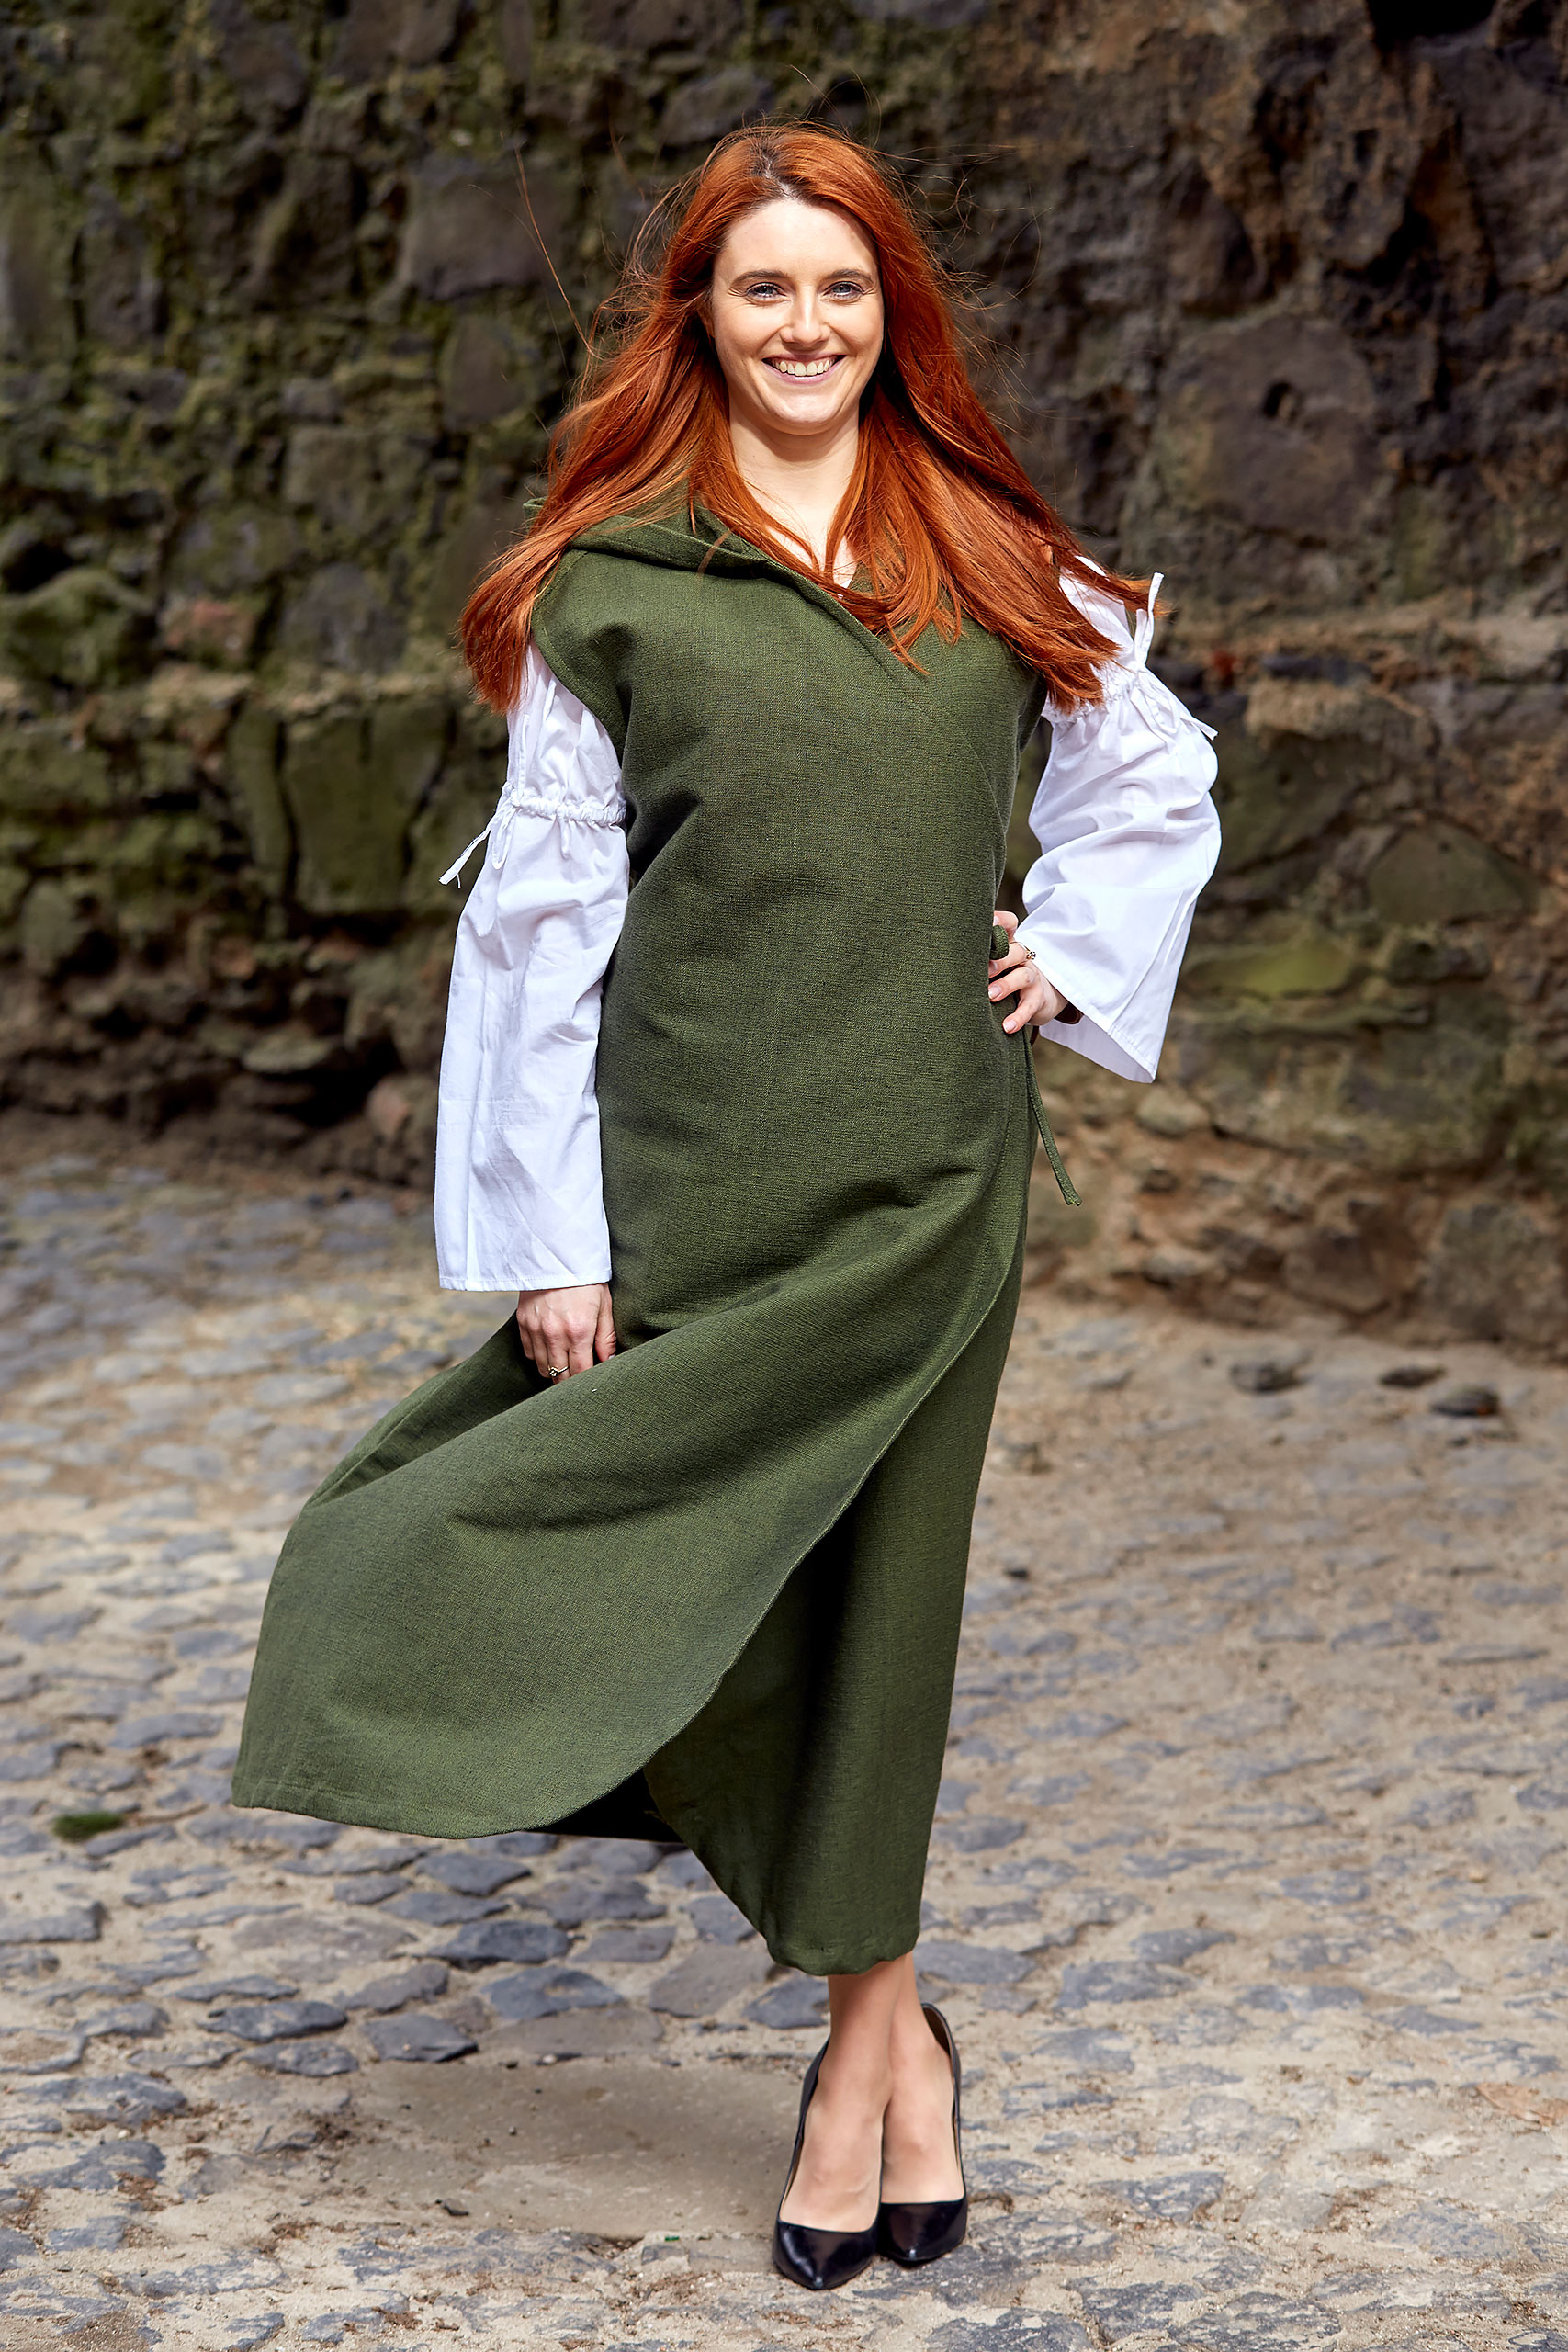 Medieval Wrap Dress Gerlin Green